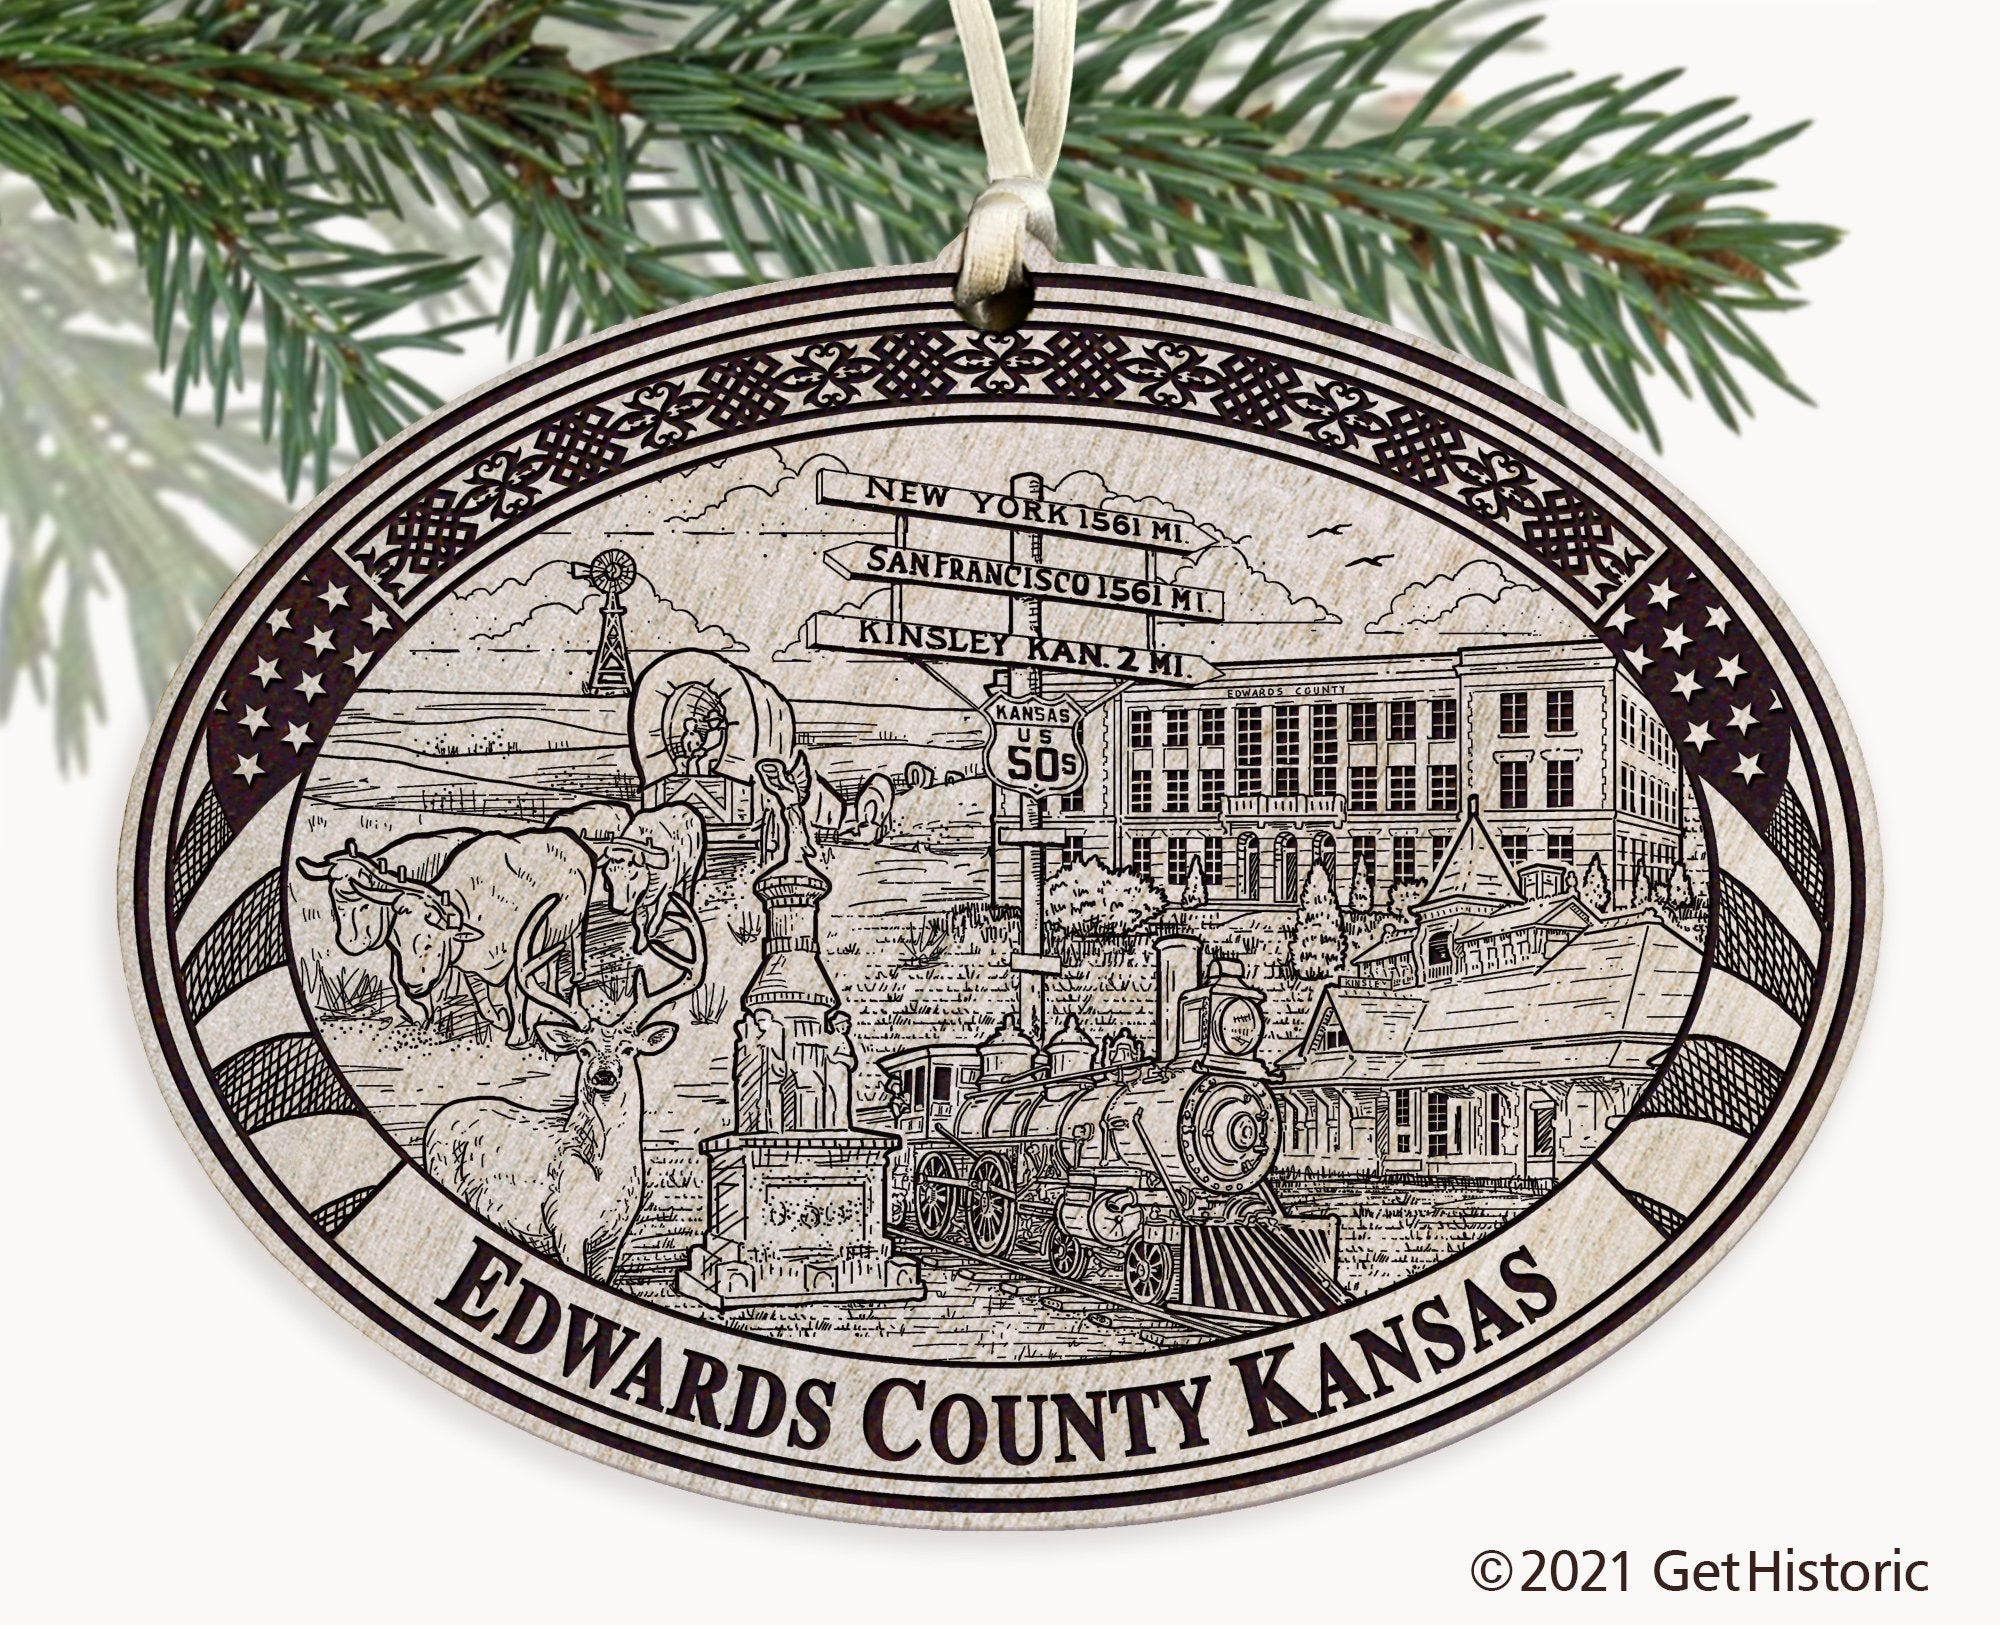 Edwards County Kansas Engraved Ornament